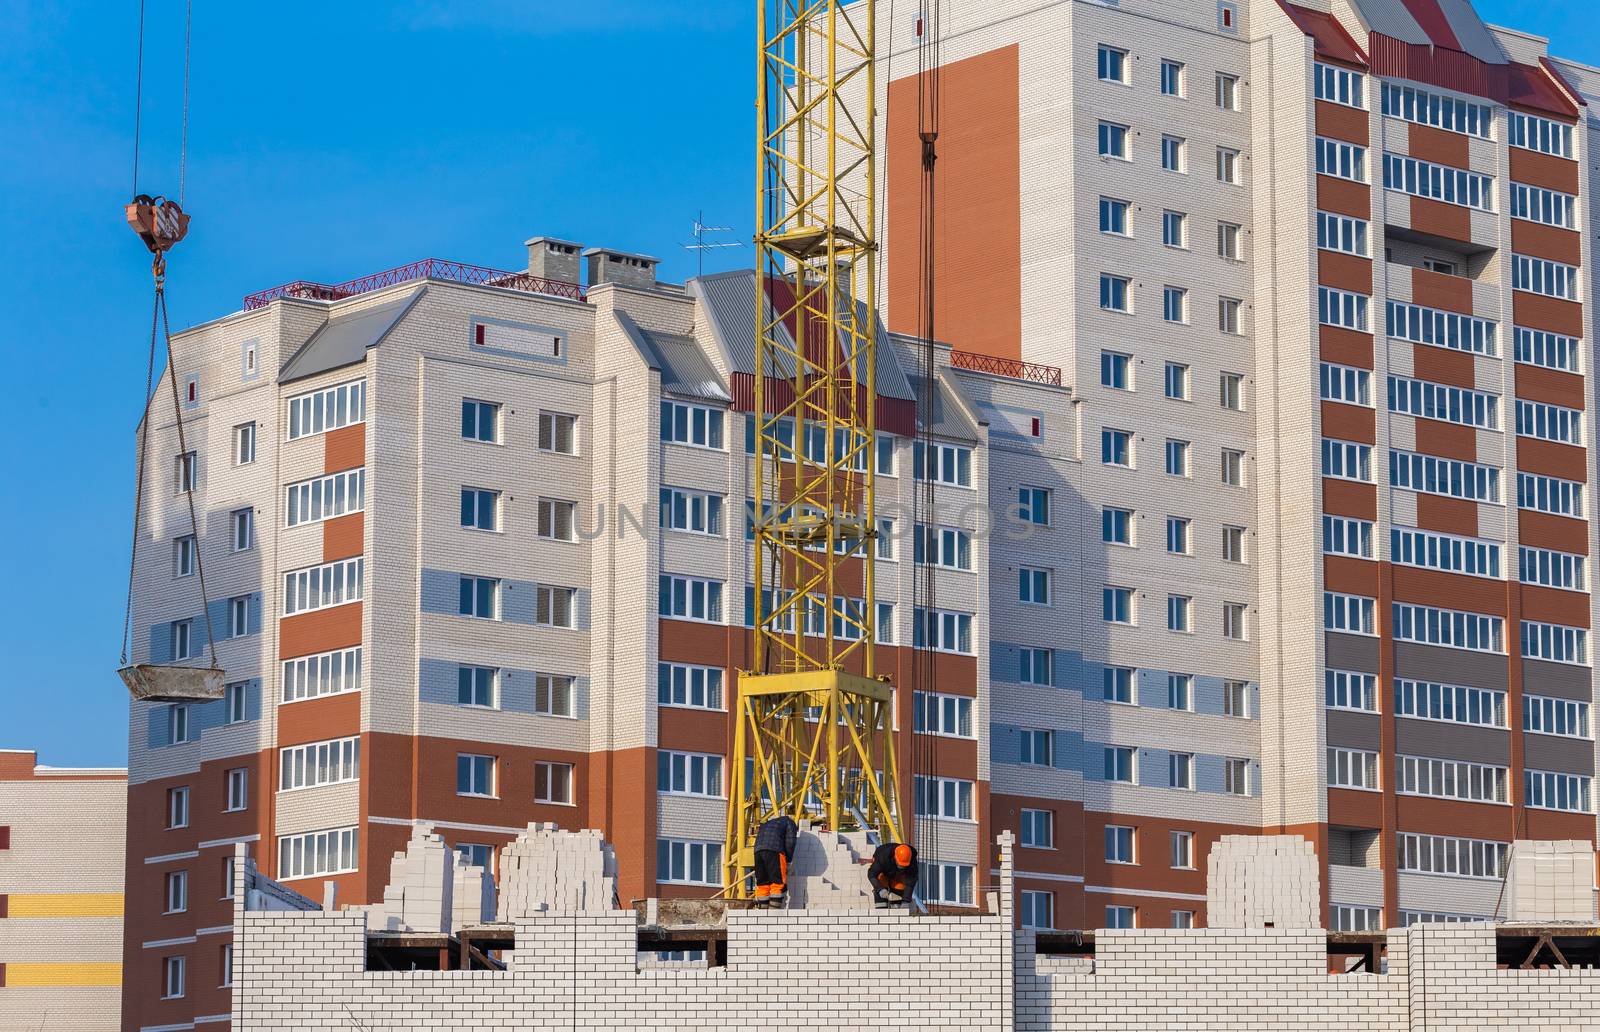 Construction site. Unfinished apartment building, cranes, workers by DamantisZ